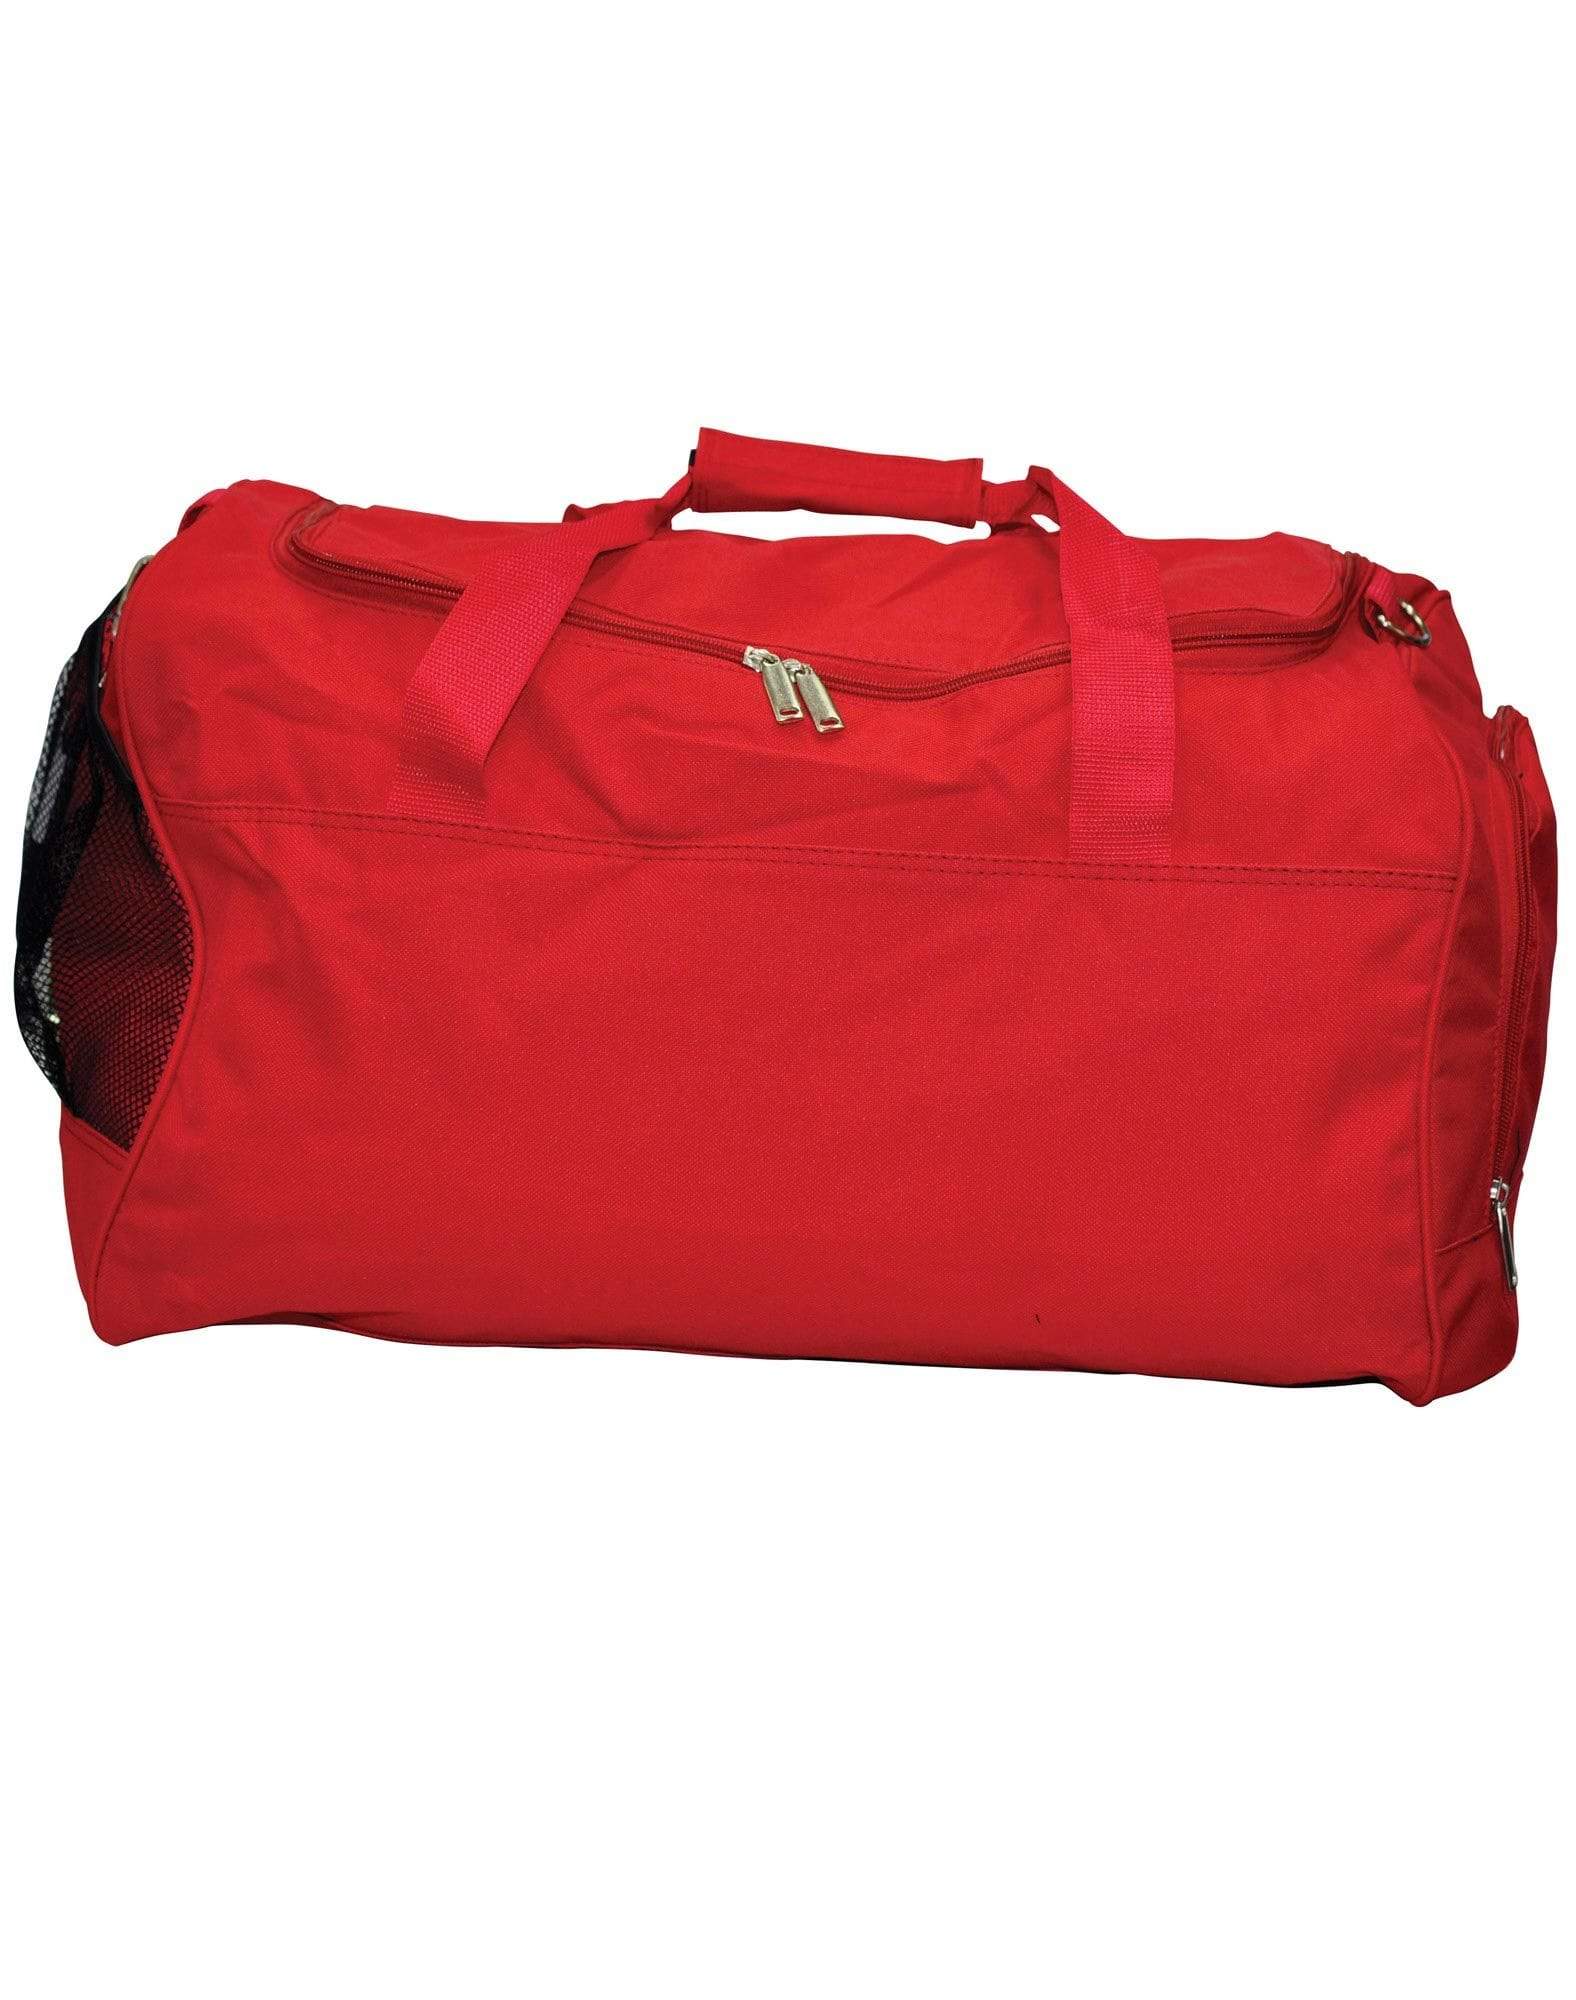 Basic Sports Bag B2000 Active Wear Winning Spirit Red "(w)51cm x (h)35cm x (d)38cm, 67.8 Litres Capacity" 